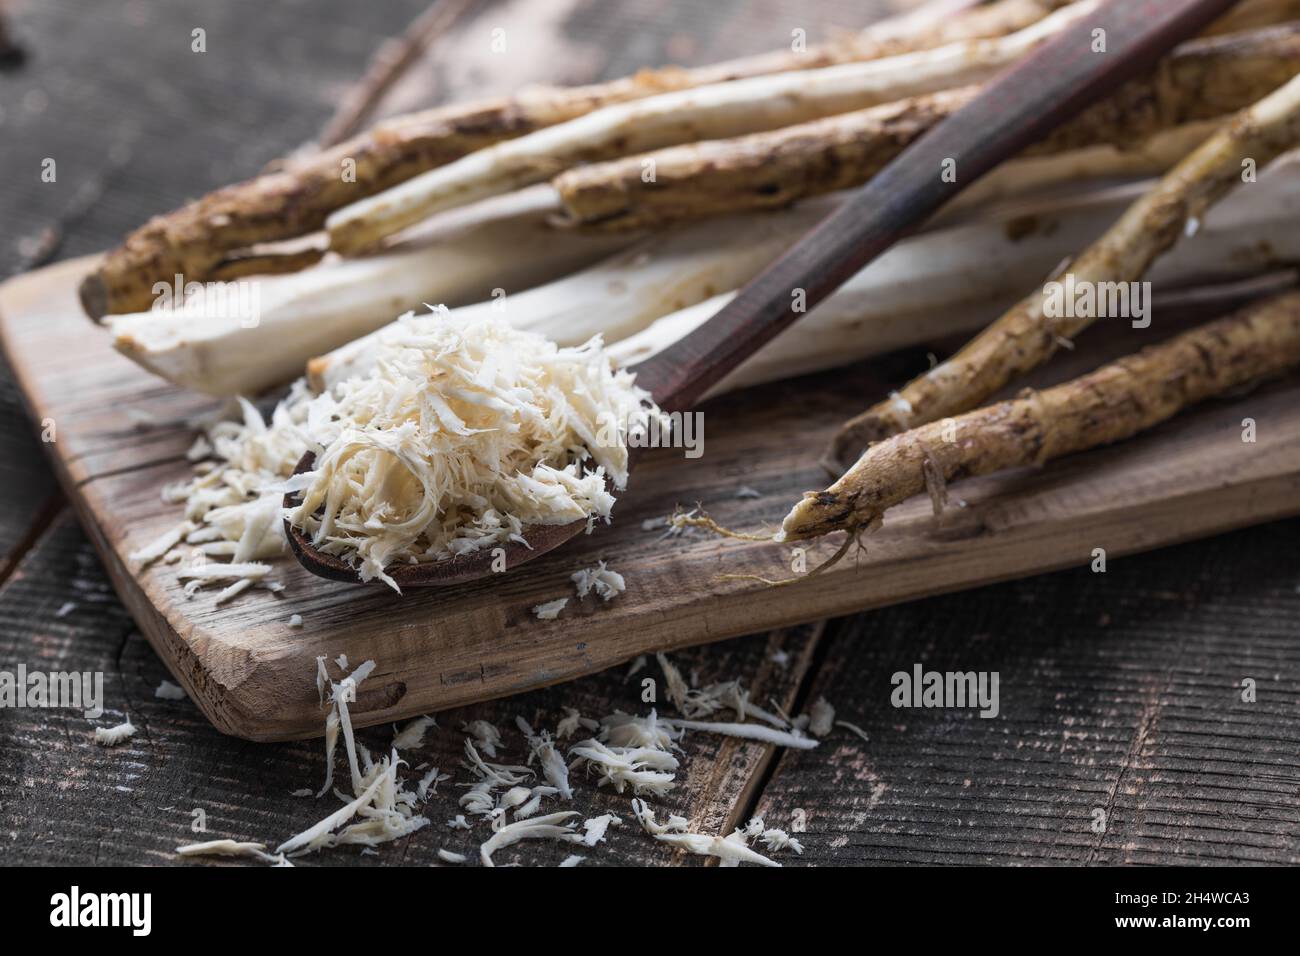 Fresh organic horseradish or Horse-radish root on wooden cutting board. Stock Photo